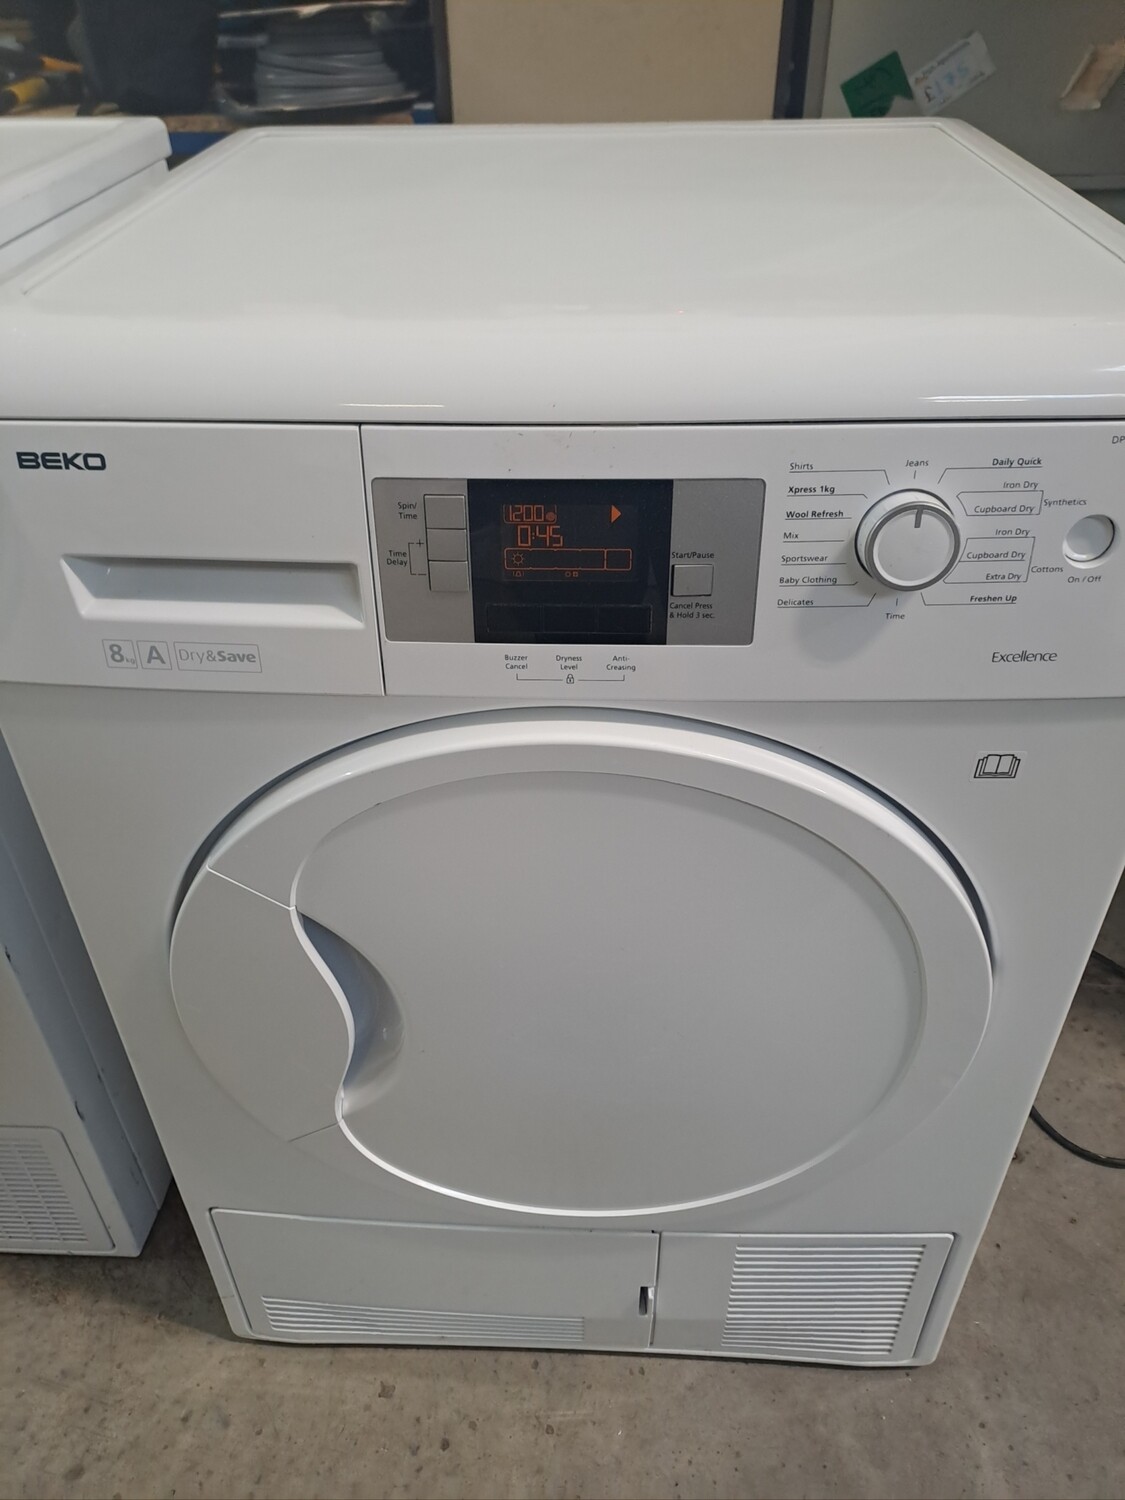 Beko DPU8360W 8kg Condenser HEAT PUMP Energy Saving Dryer White Refurbished 6 Months Guarantee